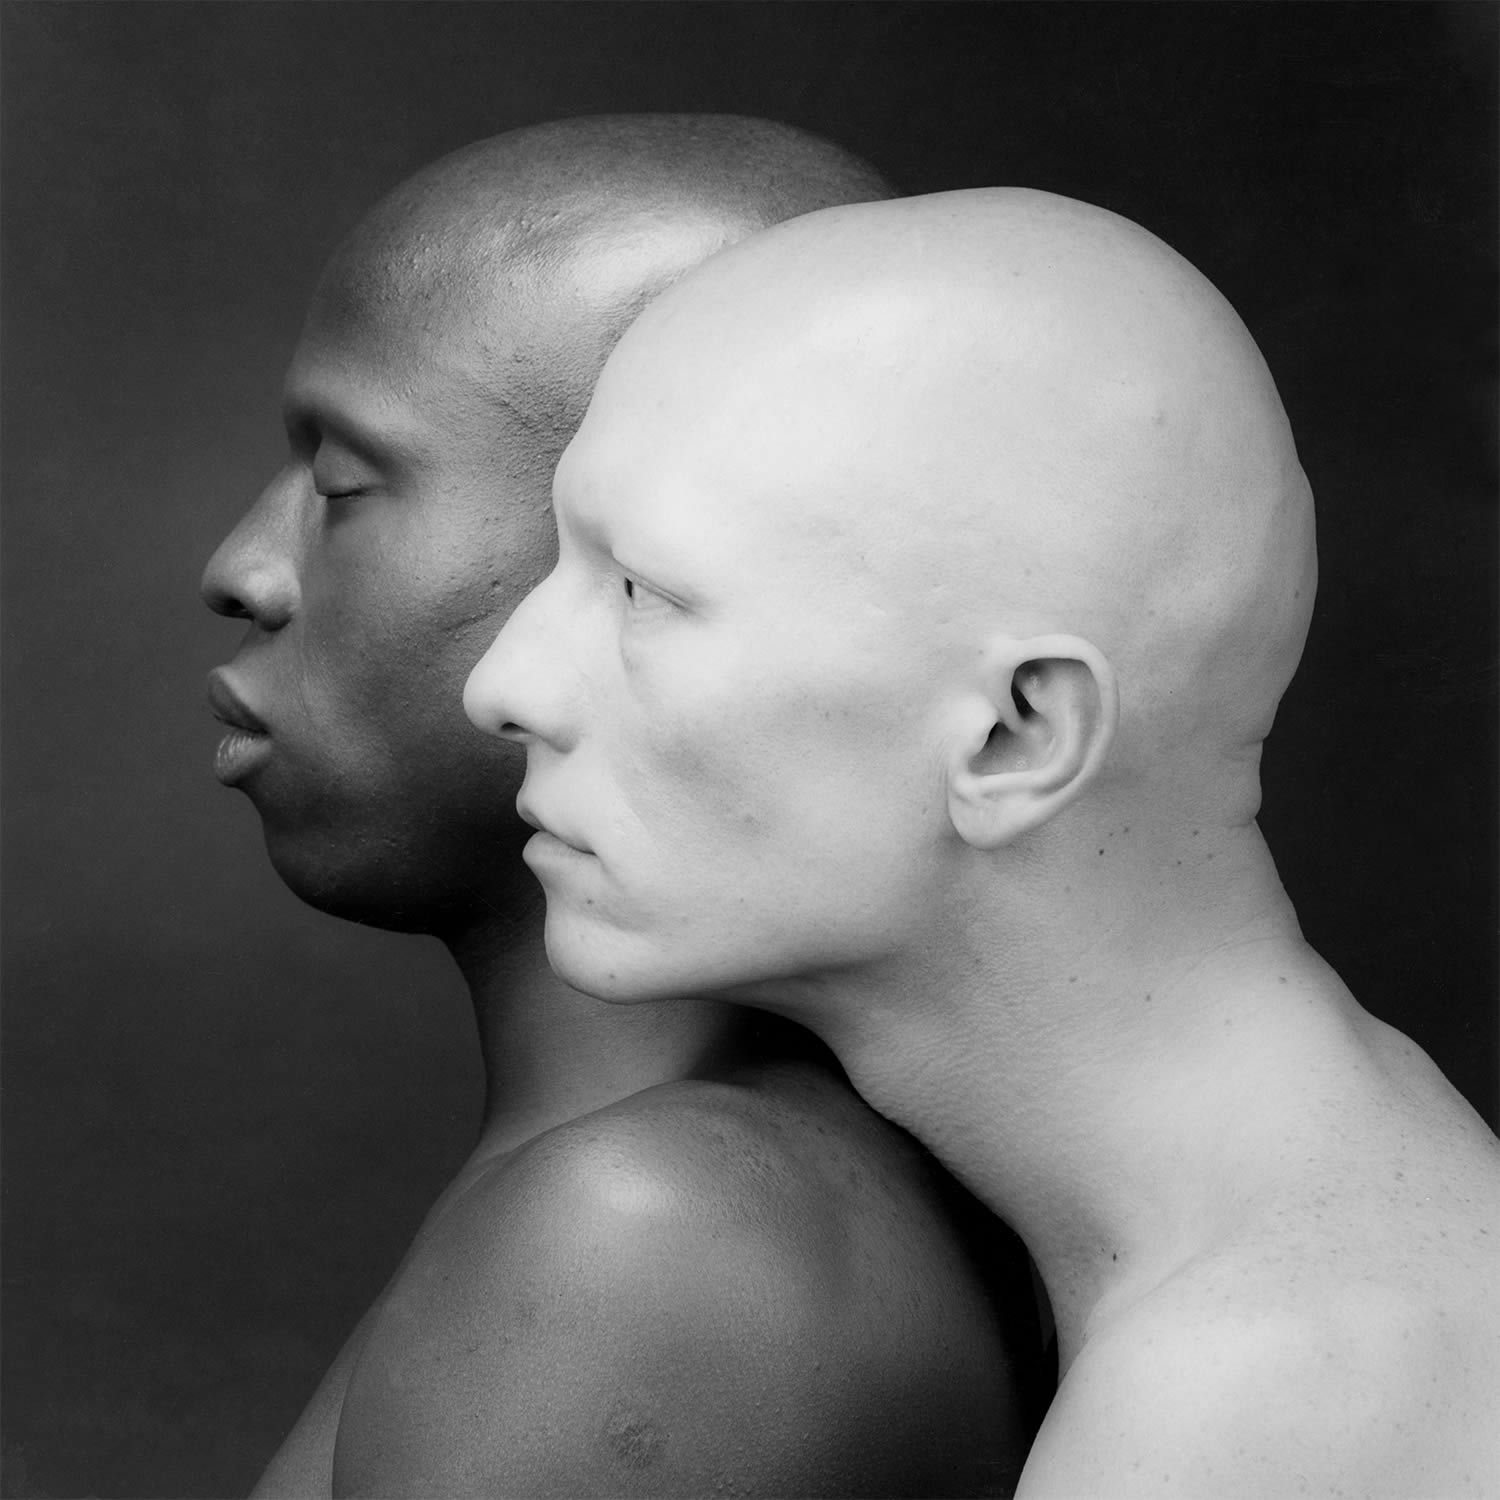 black and white, portraits. Image © The Robert Mapplethorpe Foundation, Inc.